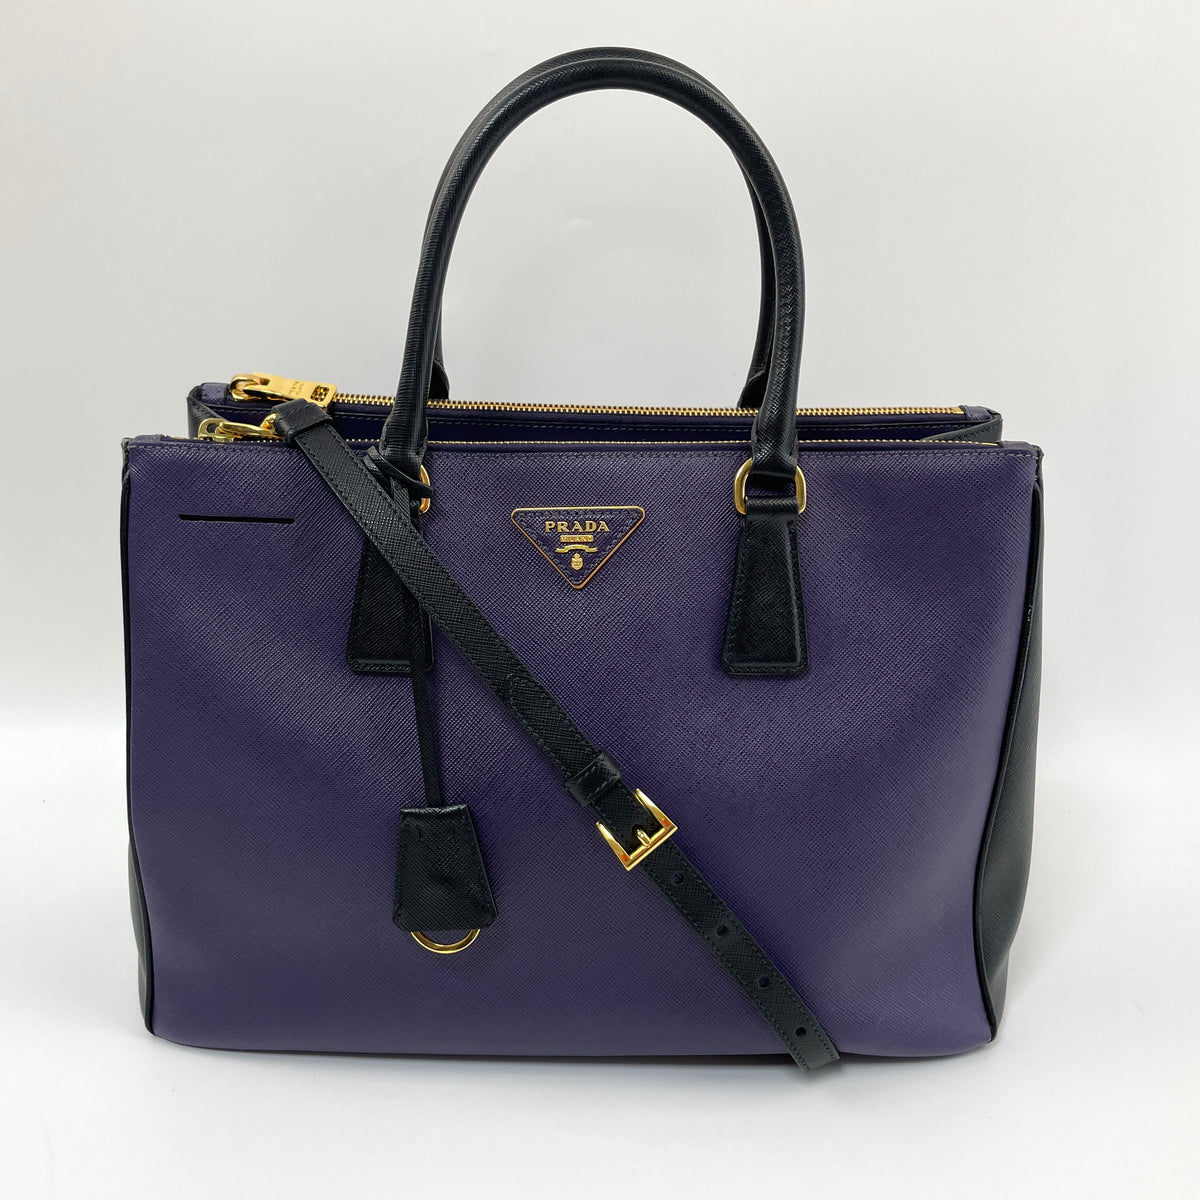 Prada Saffiano Two Way and Two Tone Purple/Black Handbag Used (6631)